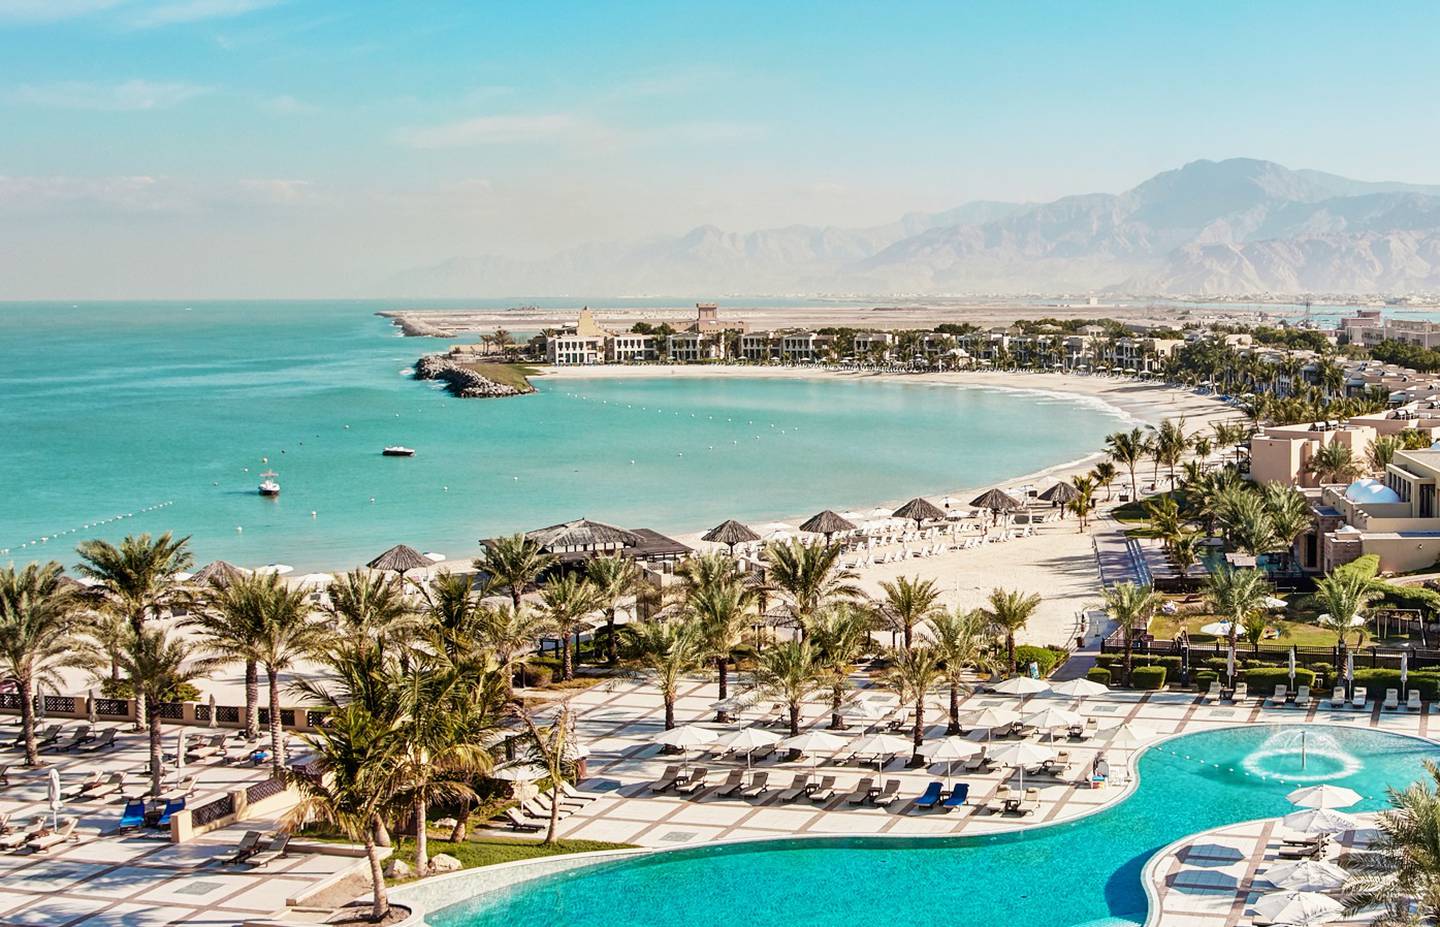 Hilton Ras Al Khaimah Beach Resort has a 1.5-kilometre sandy white beach. Photo: Hilton Ras Al Khaimah Beach Resort 